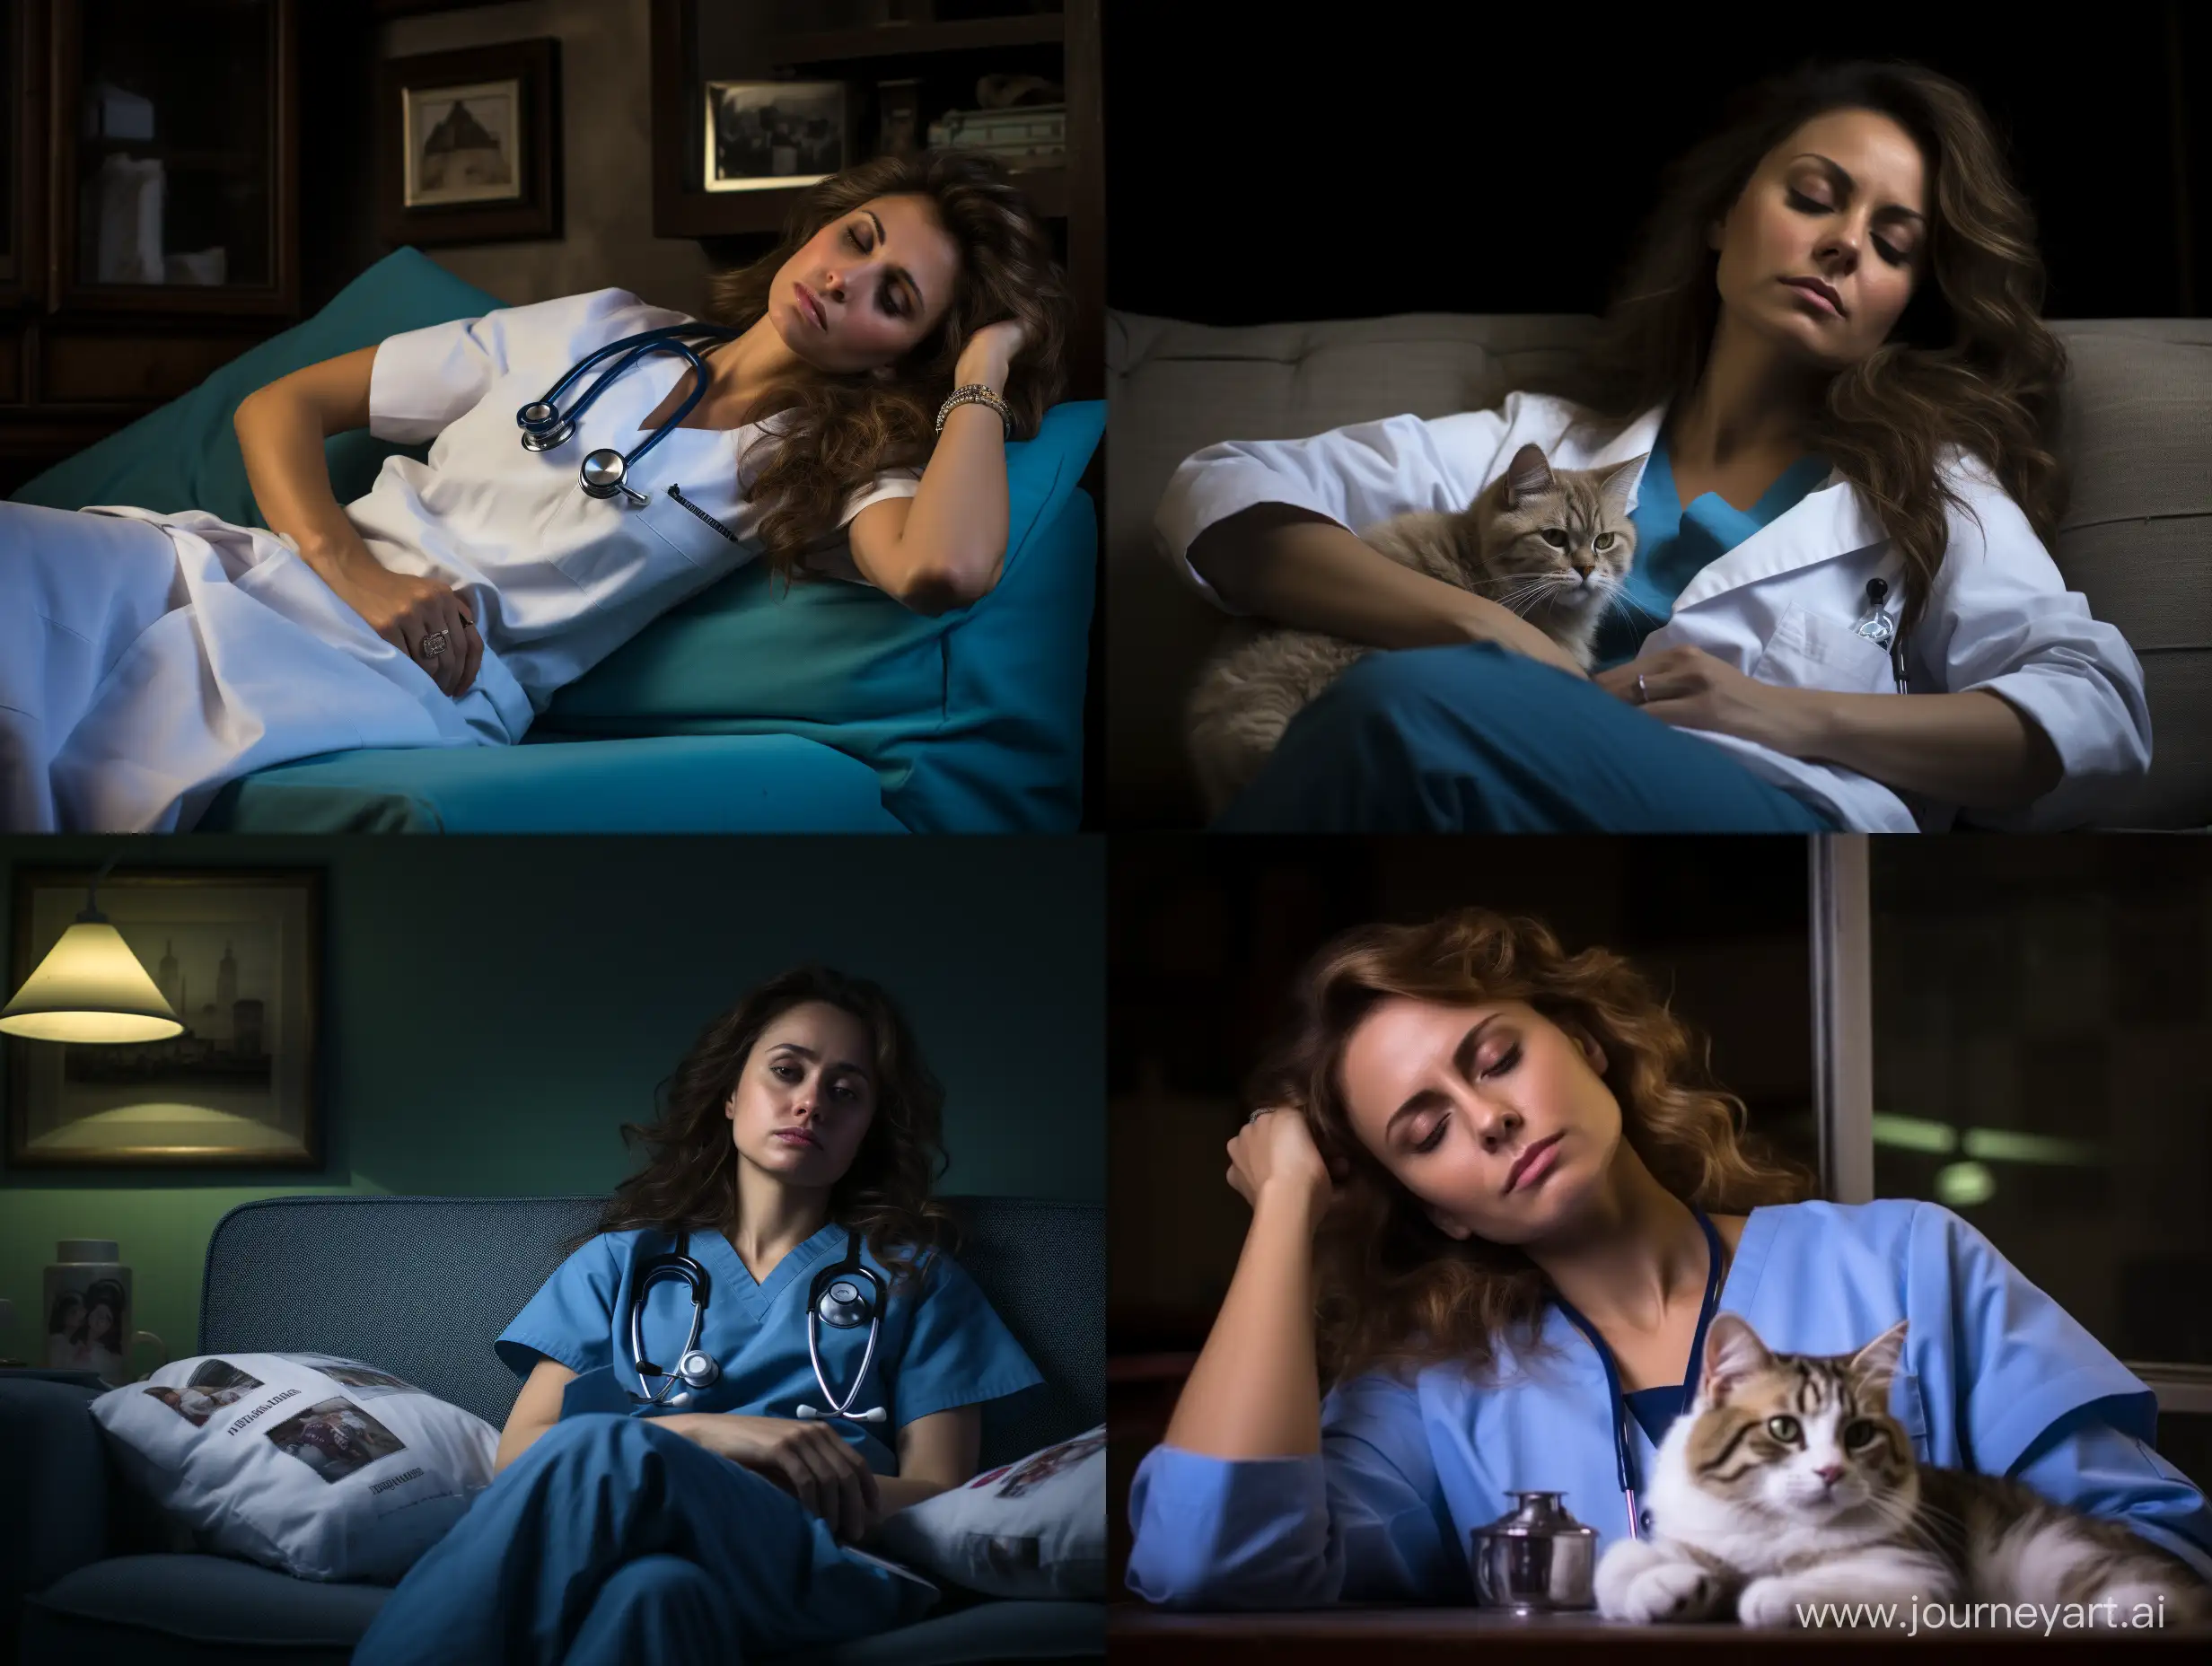 An Italian looking nurse, sitting on a sofa, sleeping birman kitten in the background, wide angle portrait photograph, cinematic